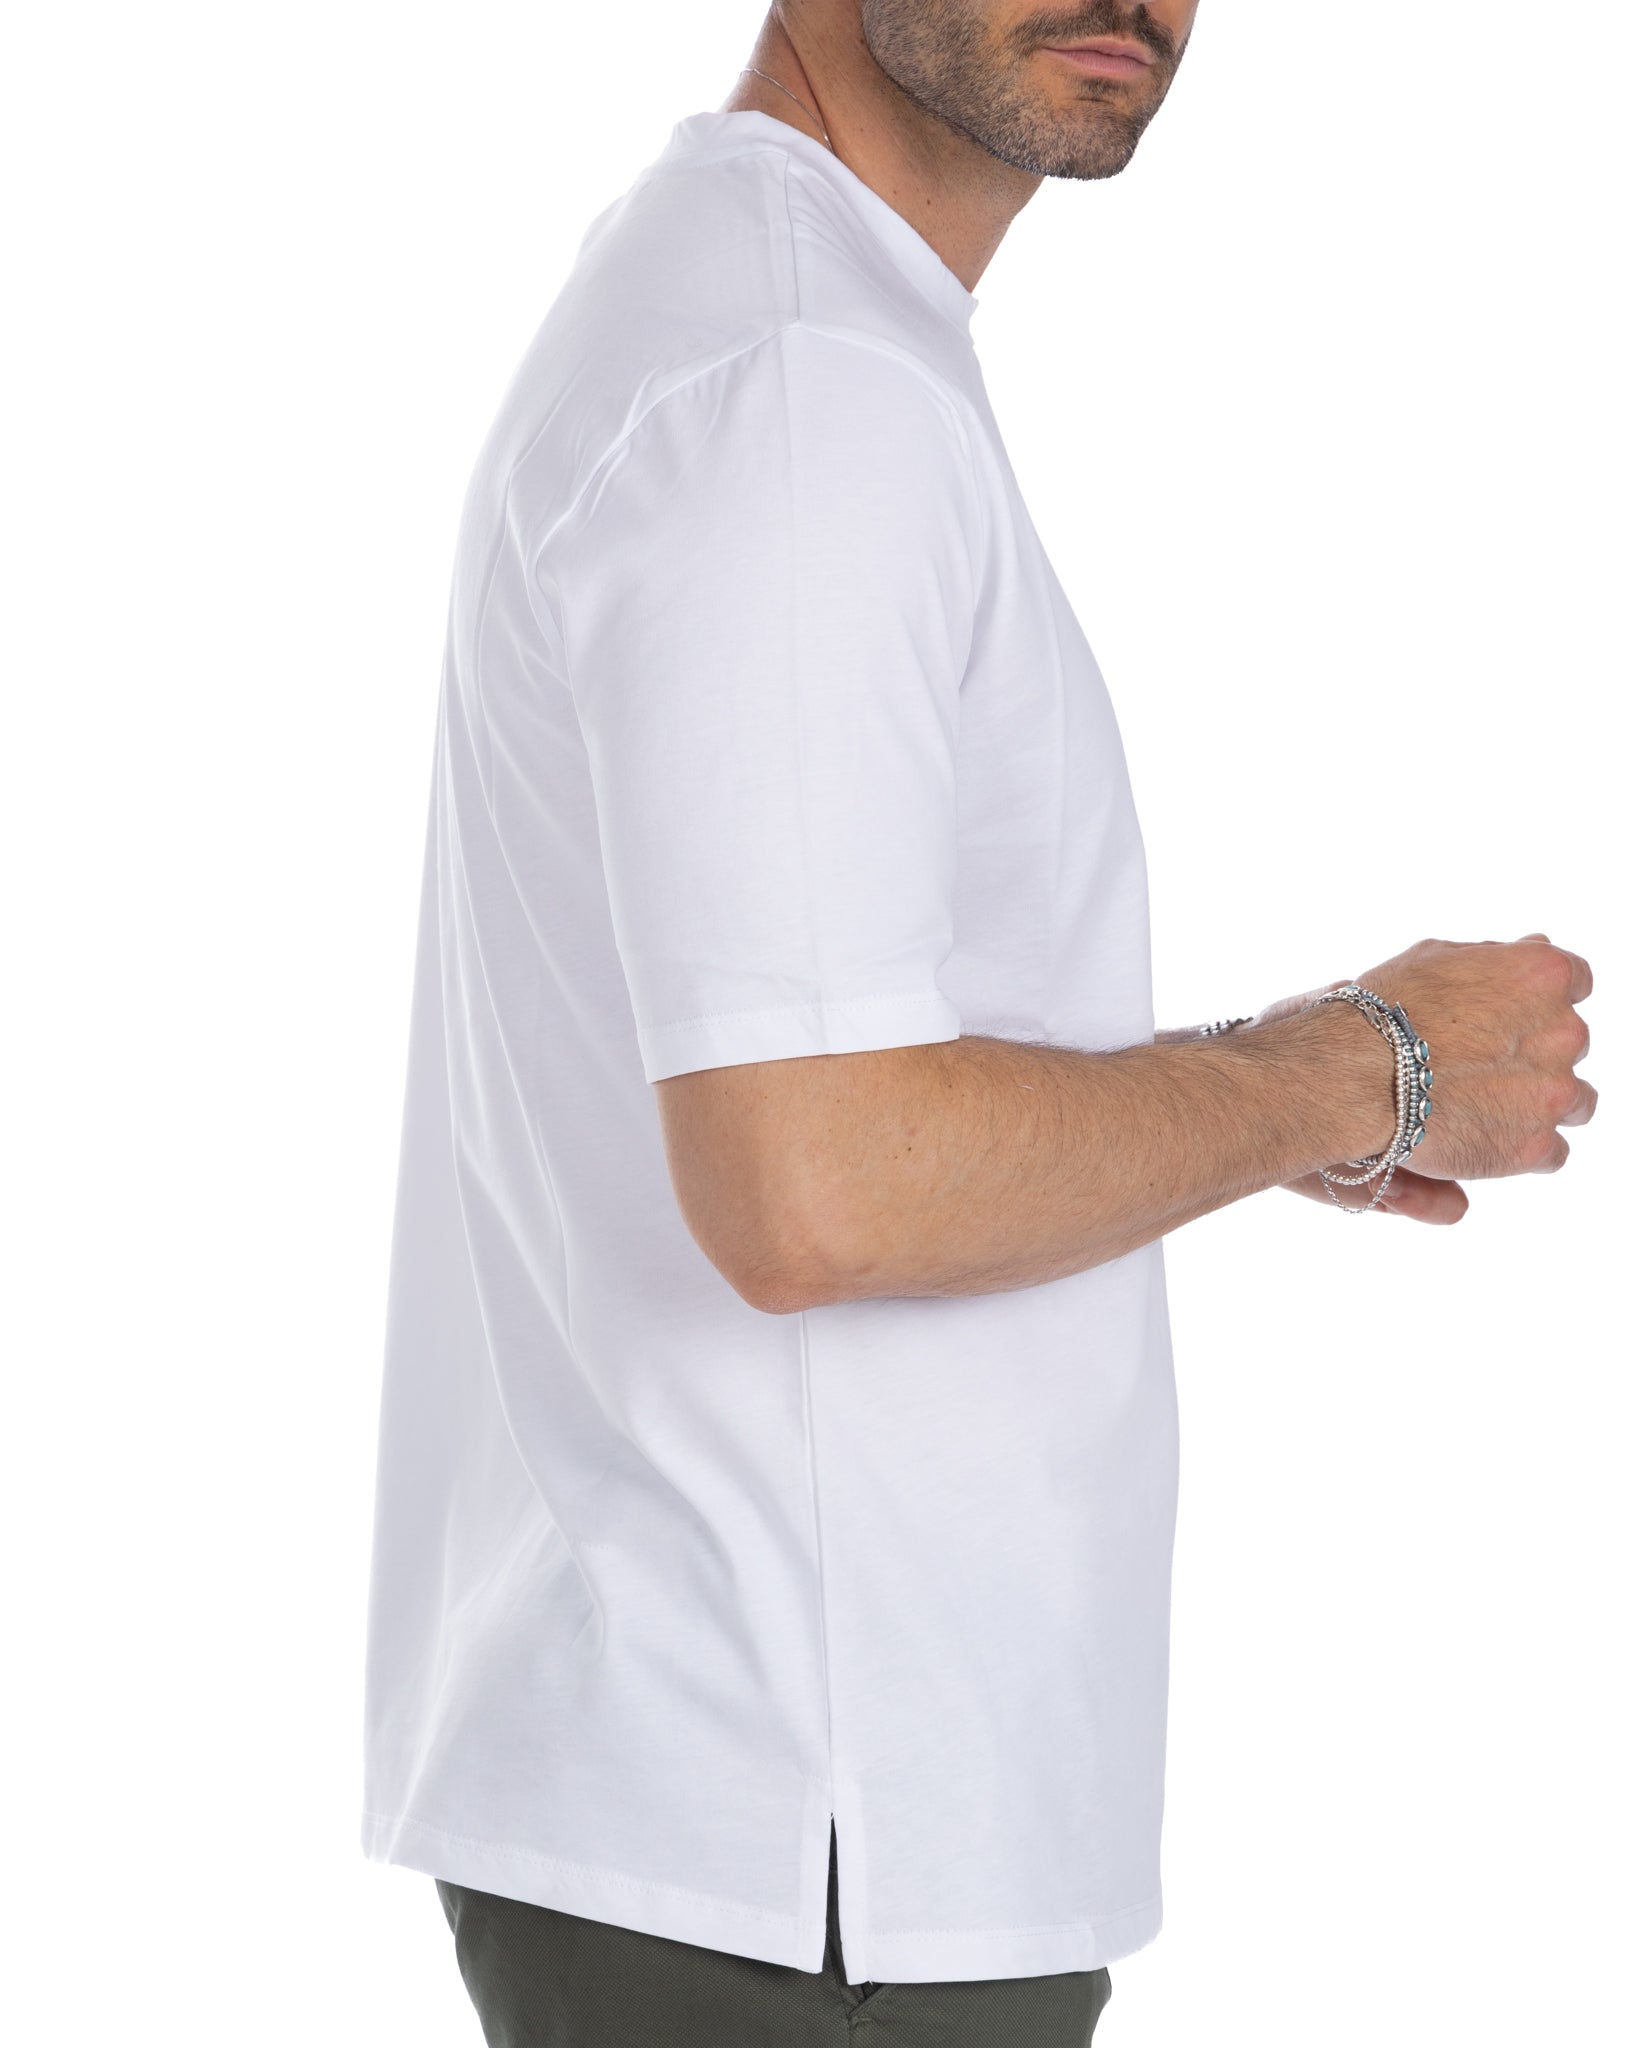 Tee - basic white cotton t-shirt